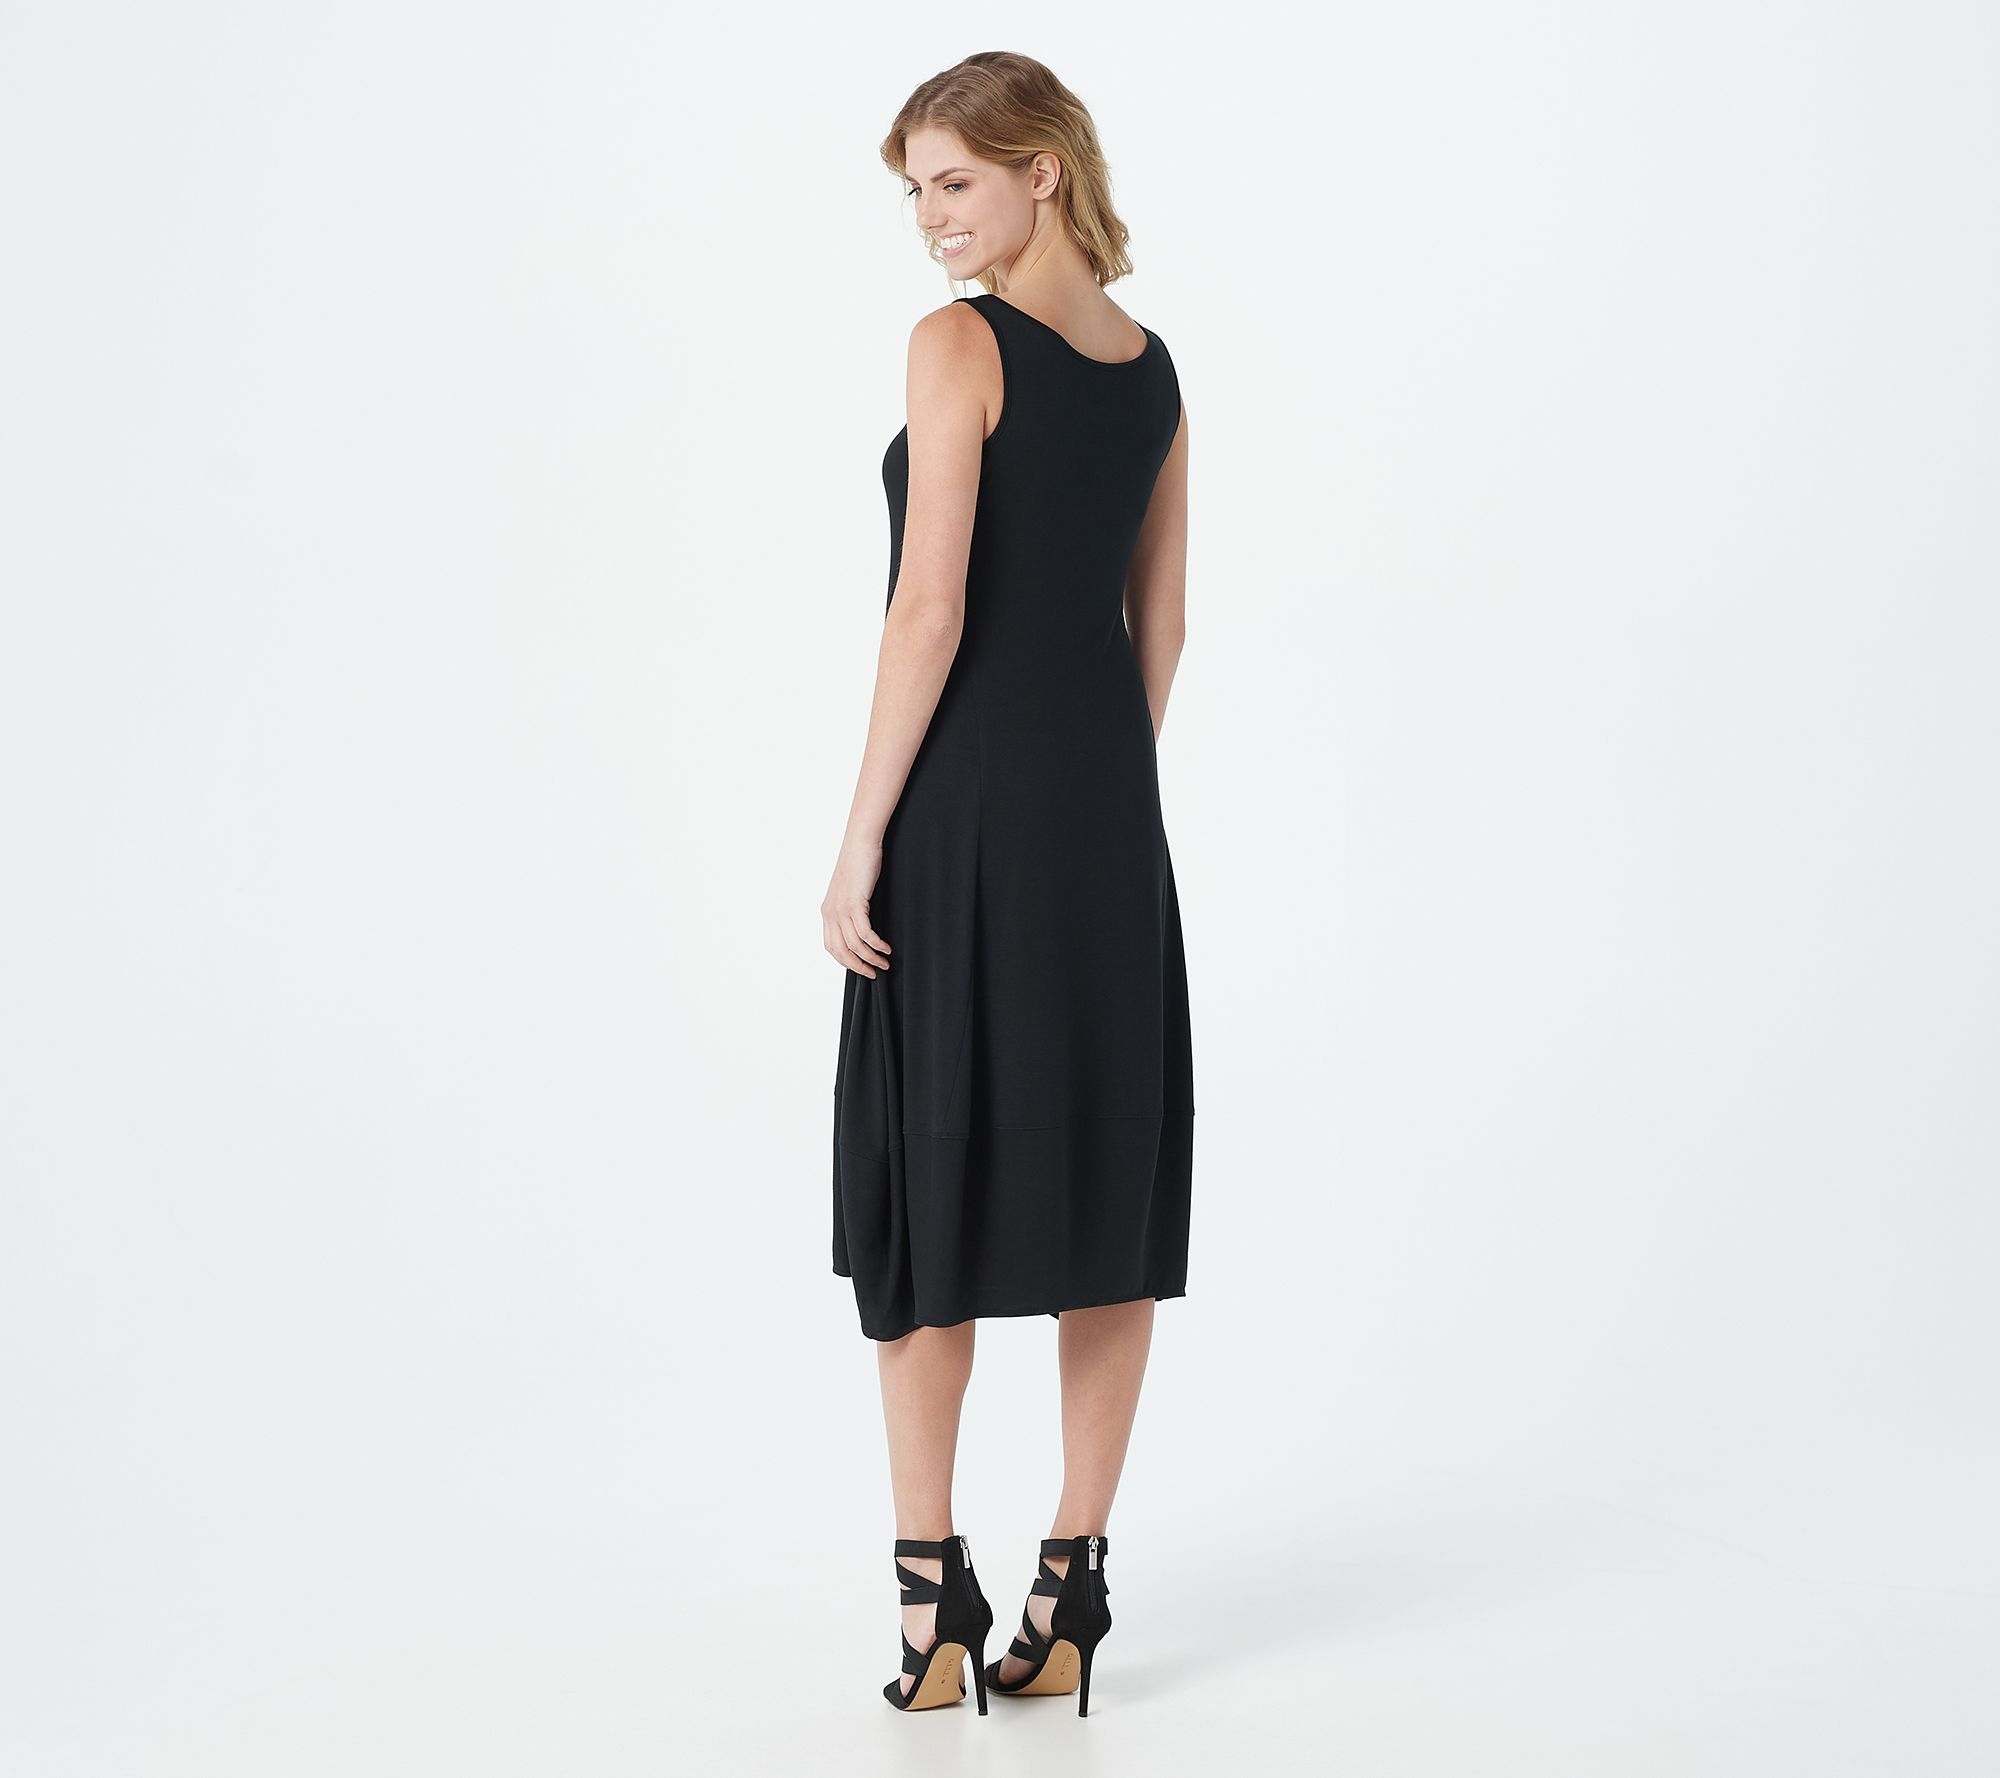 Truth + Style Knit Sleeveless Dress - QVC.com